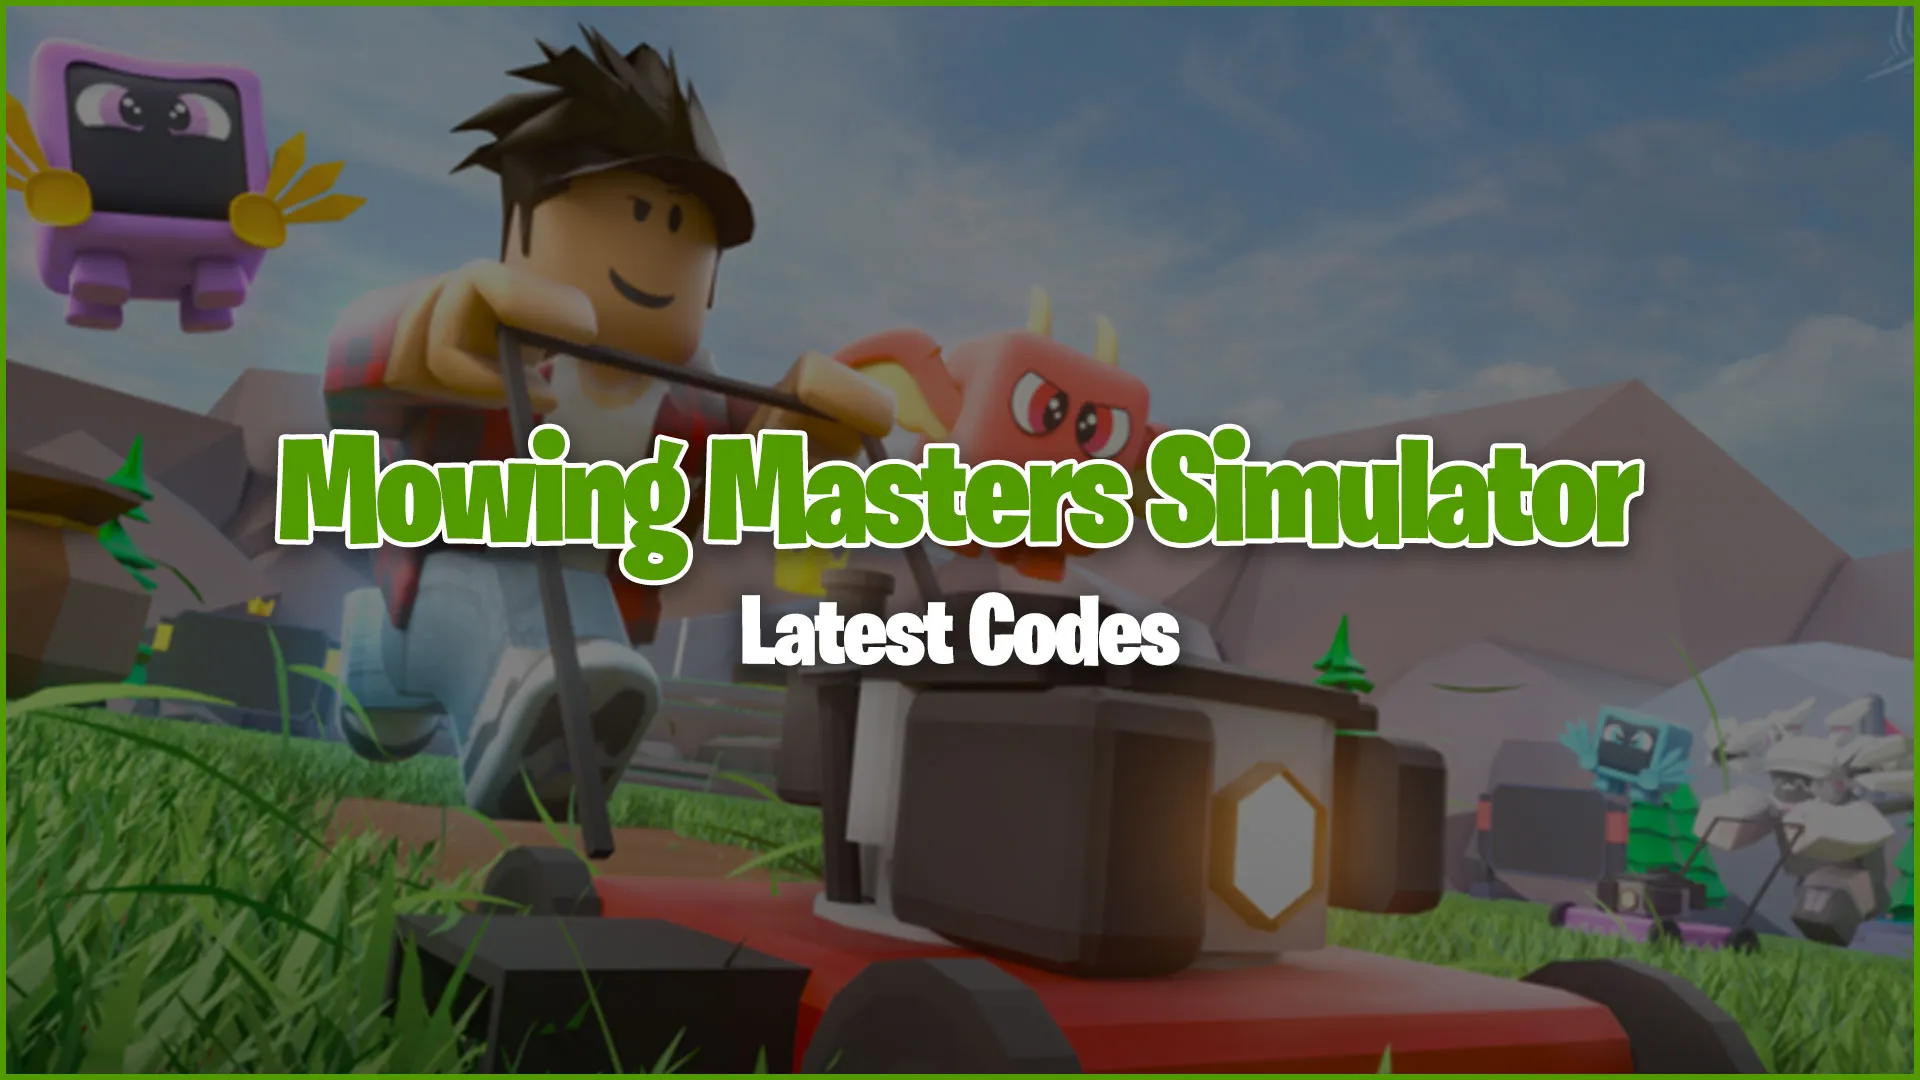 Mowing Master Simulator Codes